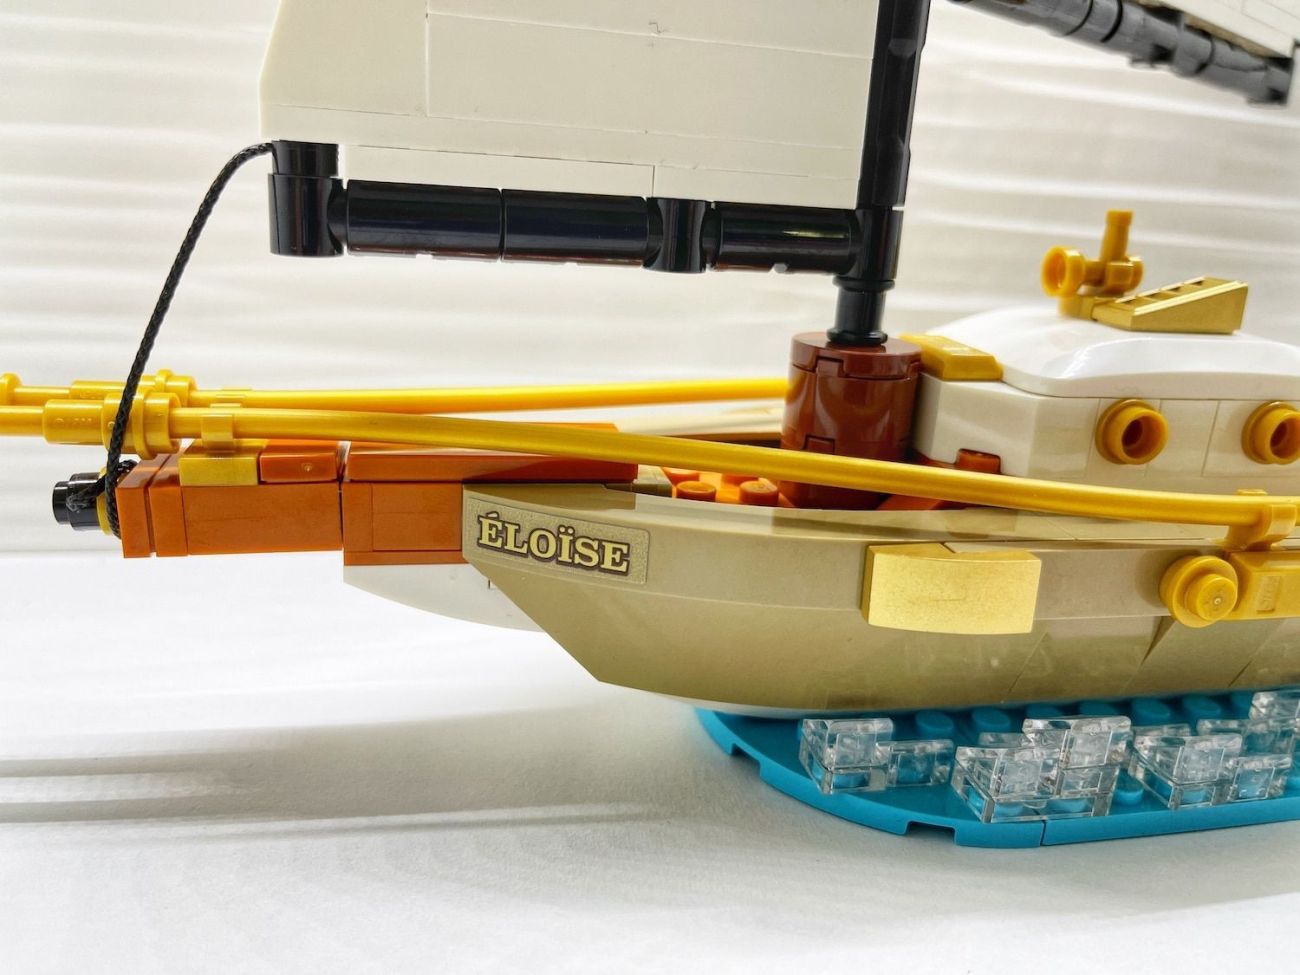 LEGO 40487 Sailboat Adventure im Review